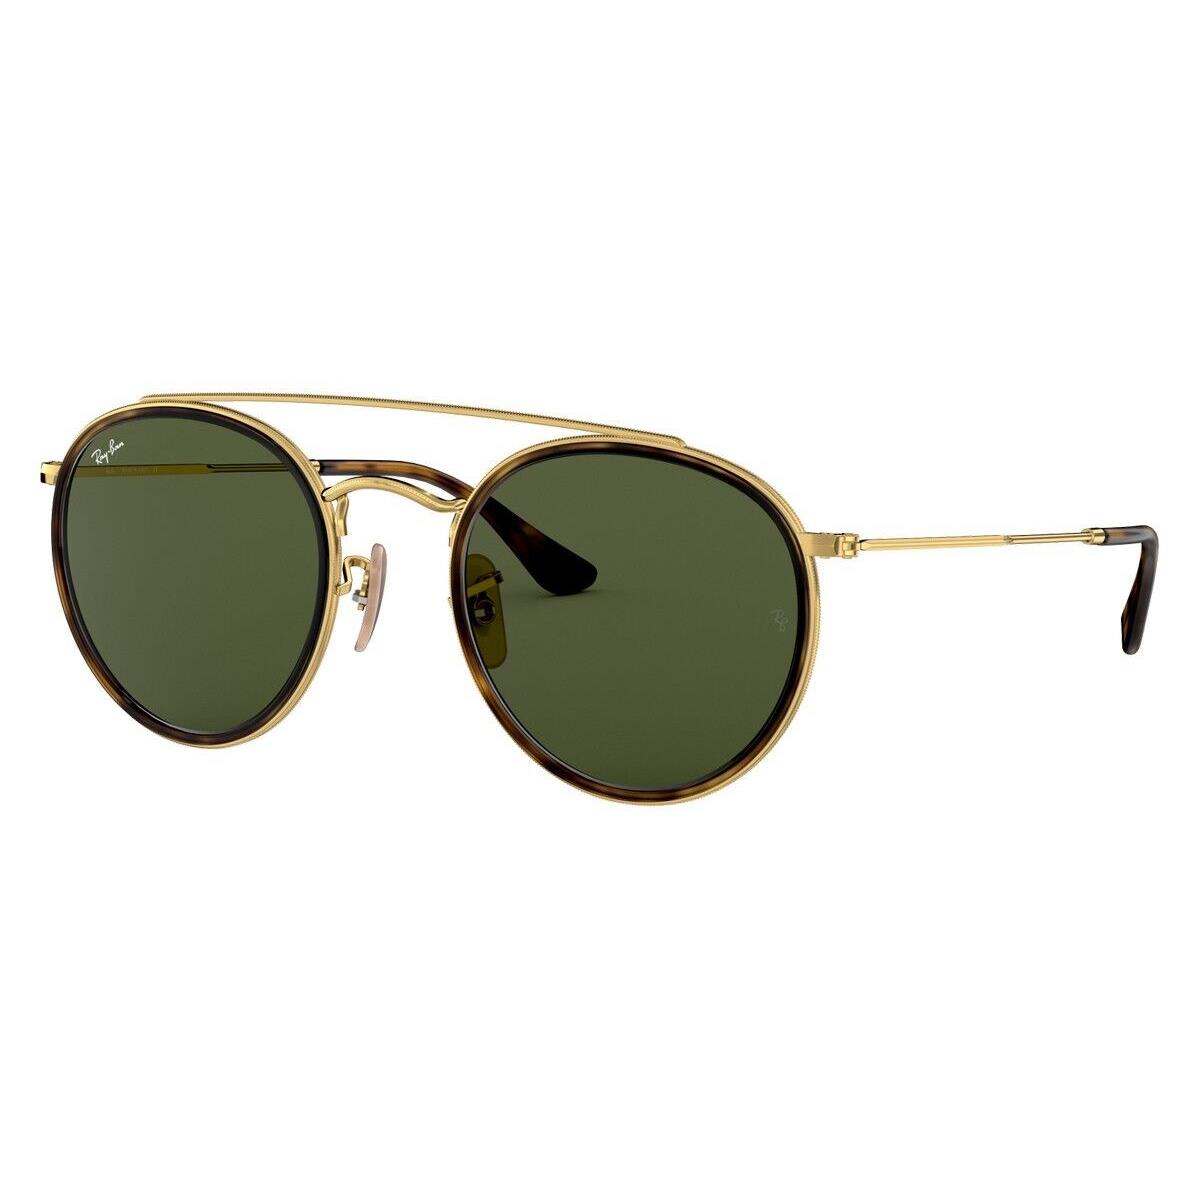 Ray-ban 0RB3647N Sunglasses Unisex Gold Round 51mm - Frame: Gold, Lens: G-15 Green, Model: